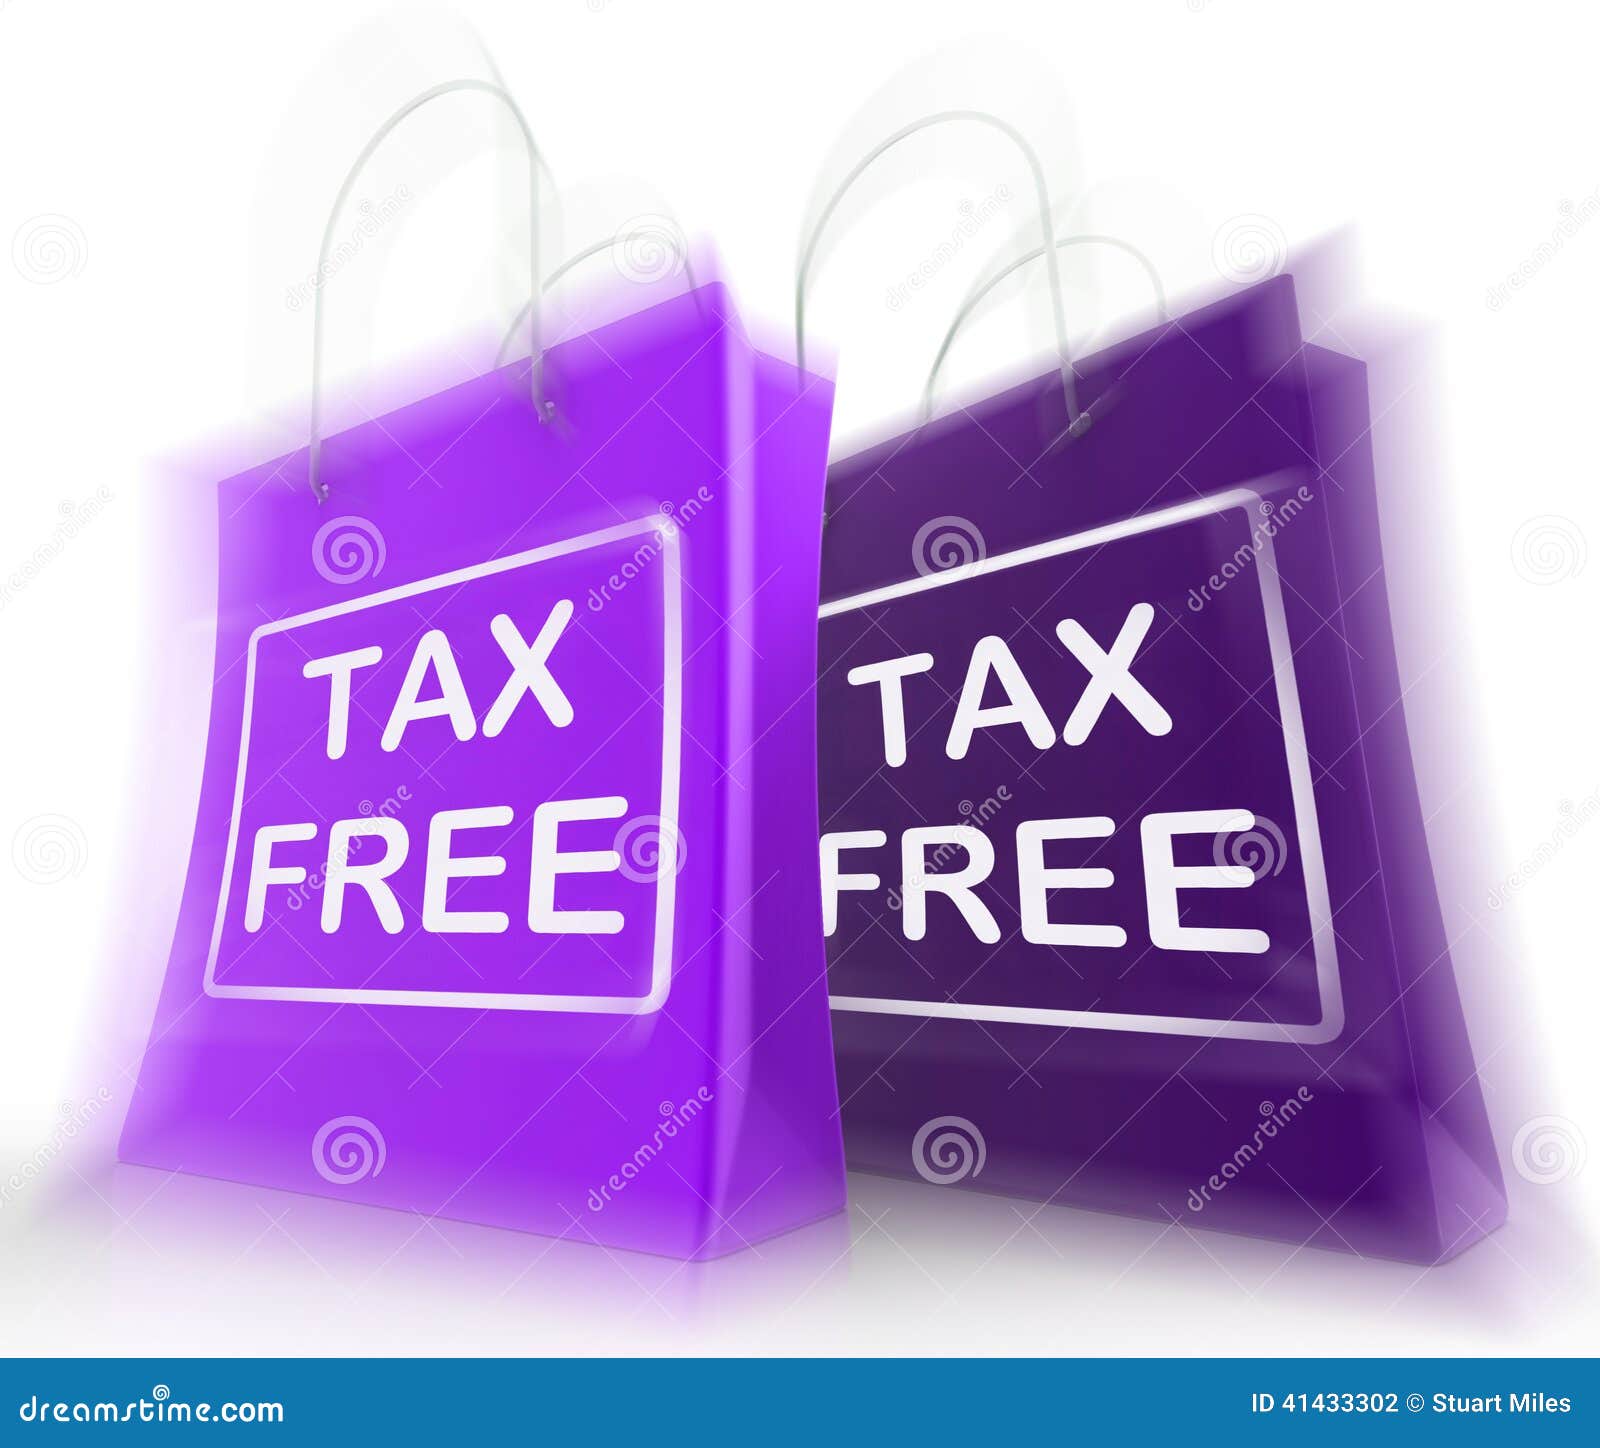 tax free shopping bag represents duty exempt discounts